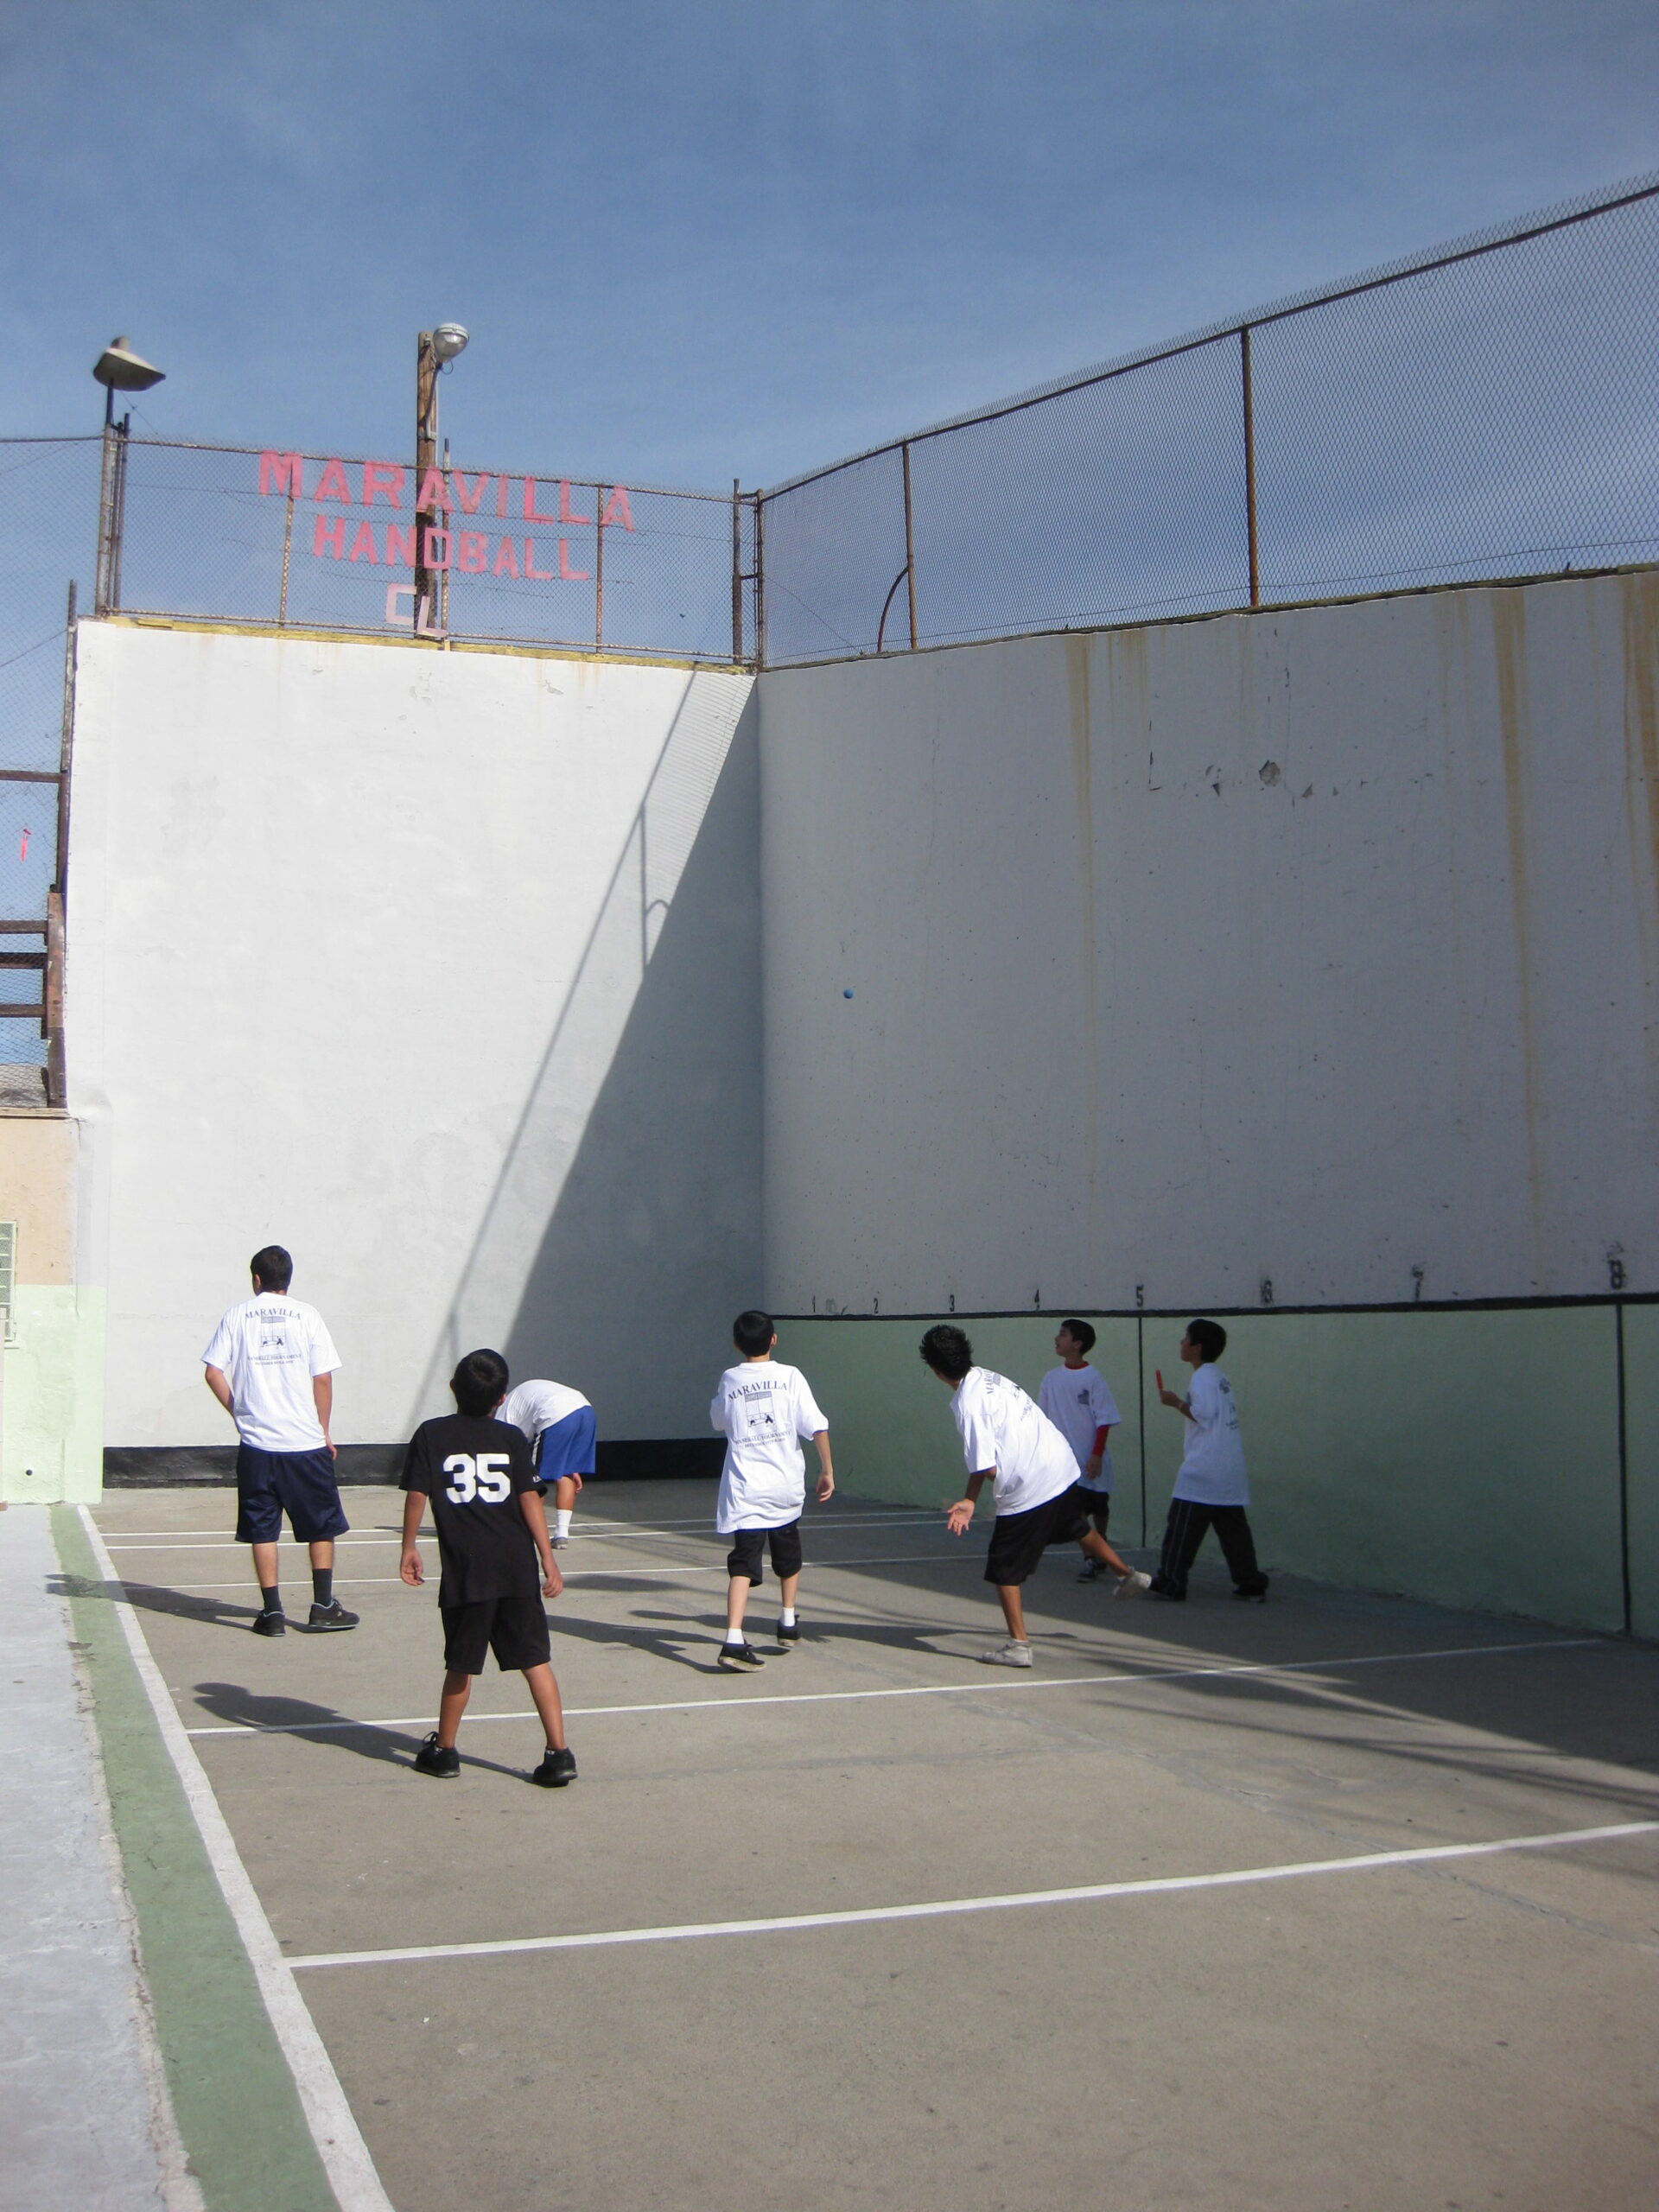 Maravilla Handball Court and El Centro Grocery